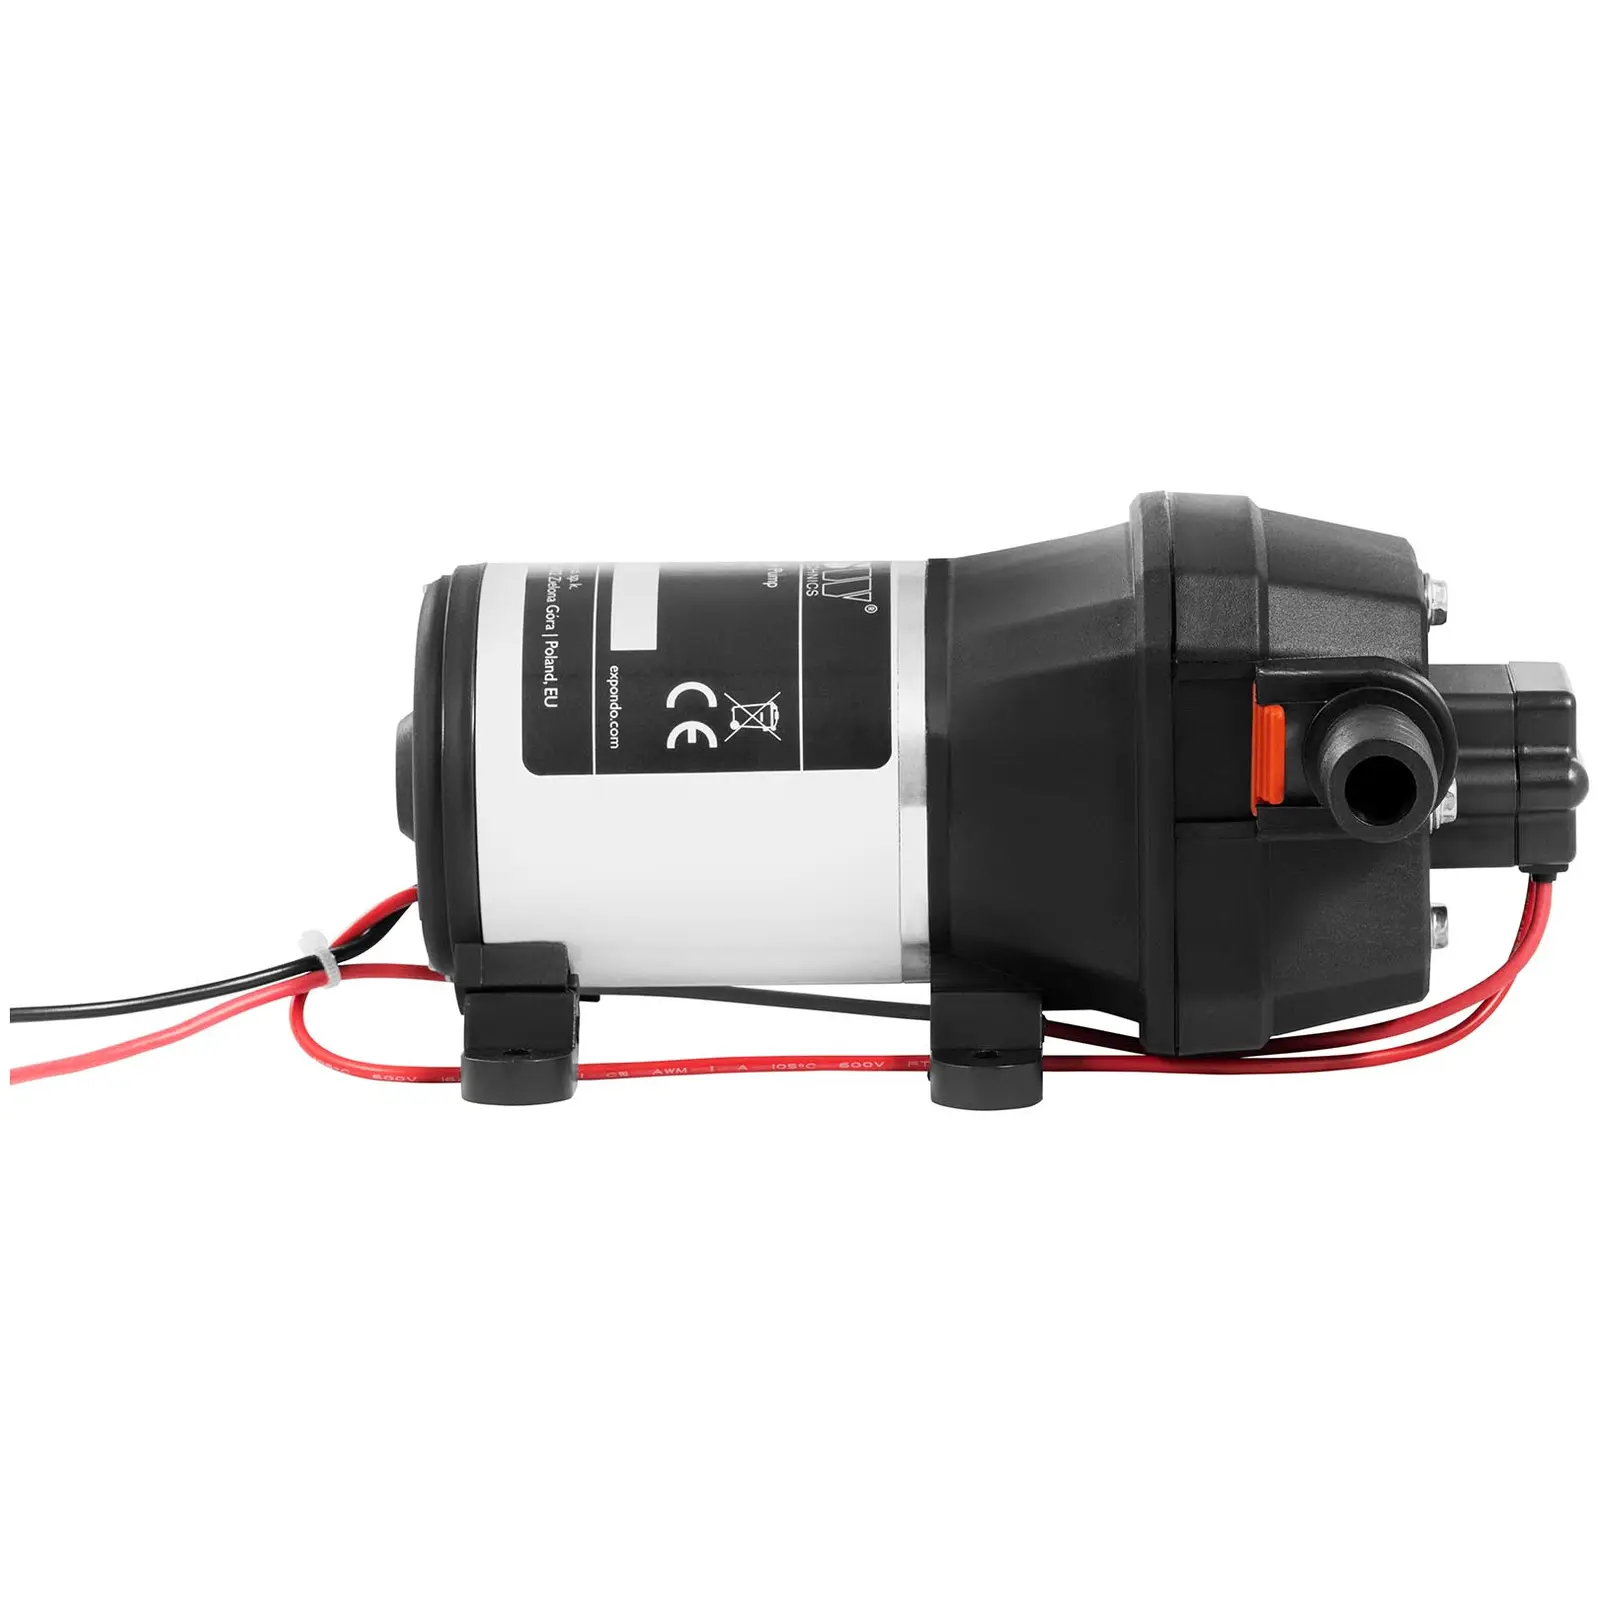 Pressure water pump with pressure switch - 12 V - 10 l/min - max. 60 °C - 1.2 bar